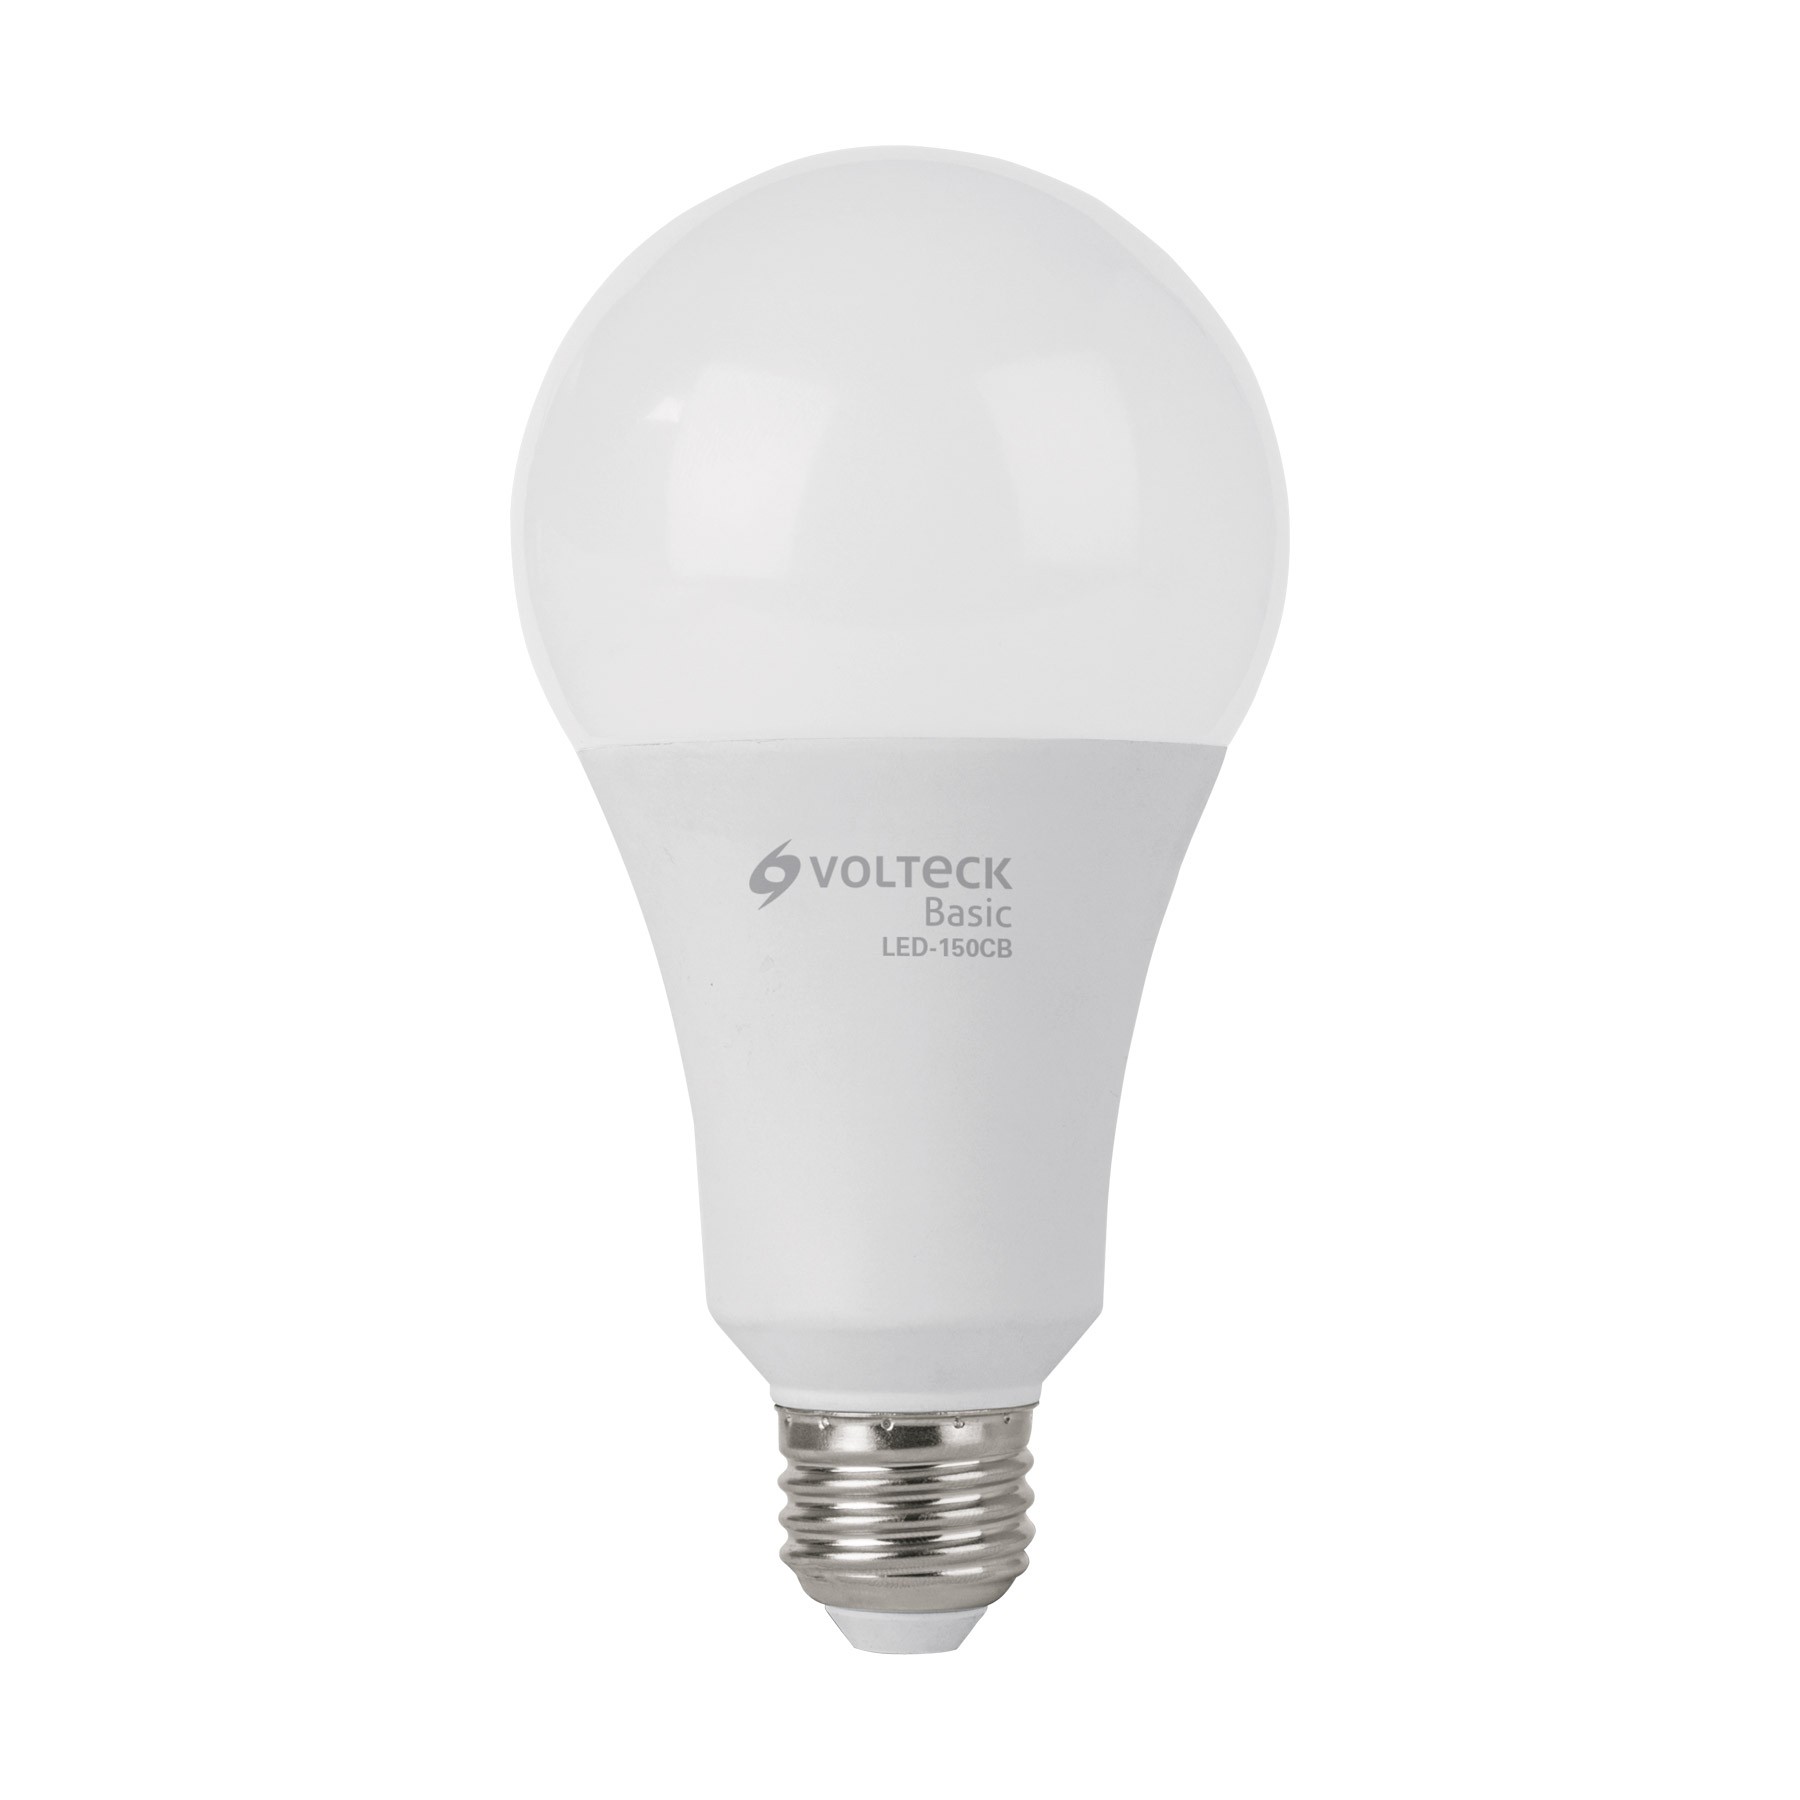 Lámpara de LED tipo bulbo A25 18 W, luz cálida, caja, Basic